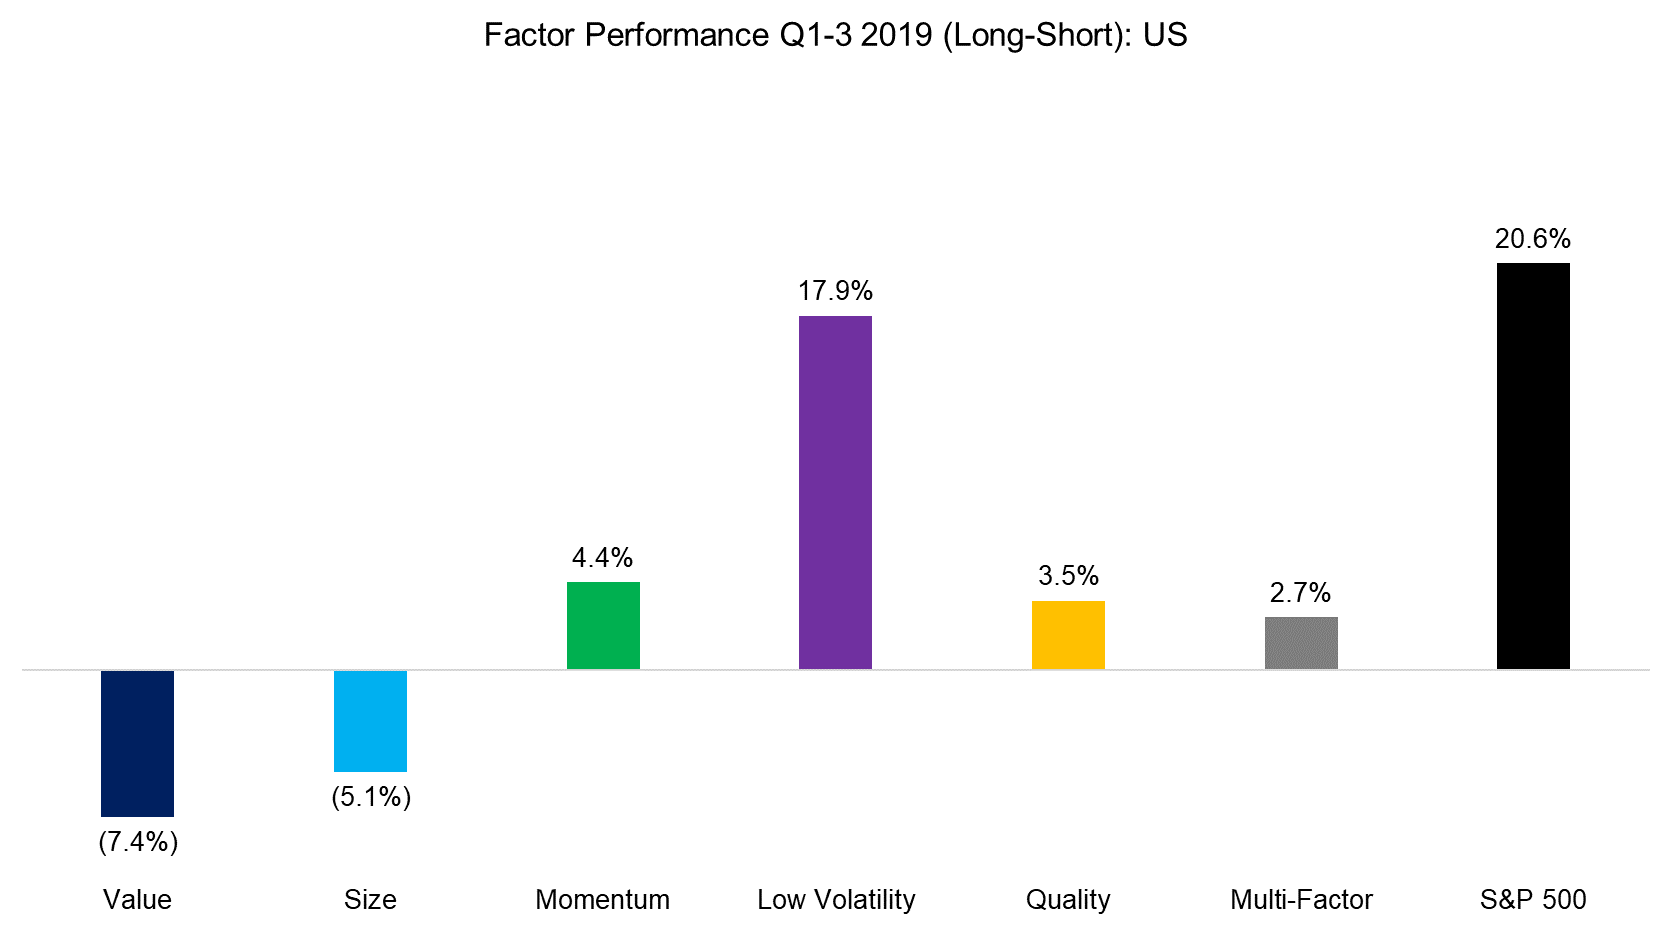 Factor Performance Q1-3 2019 (Long-Short) US